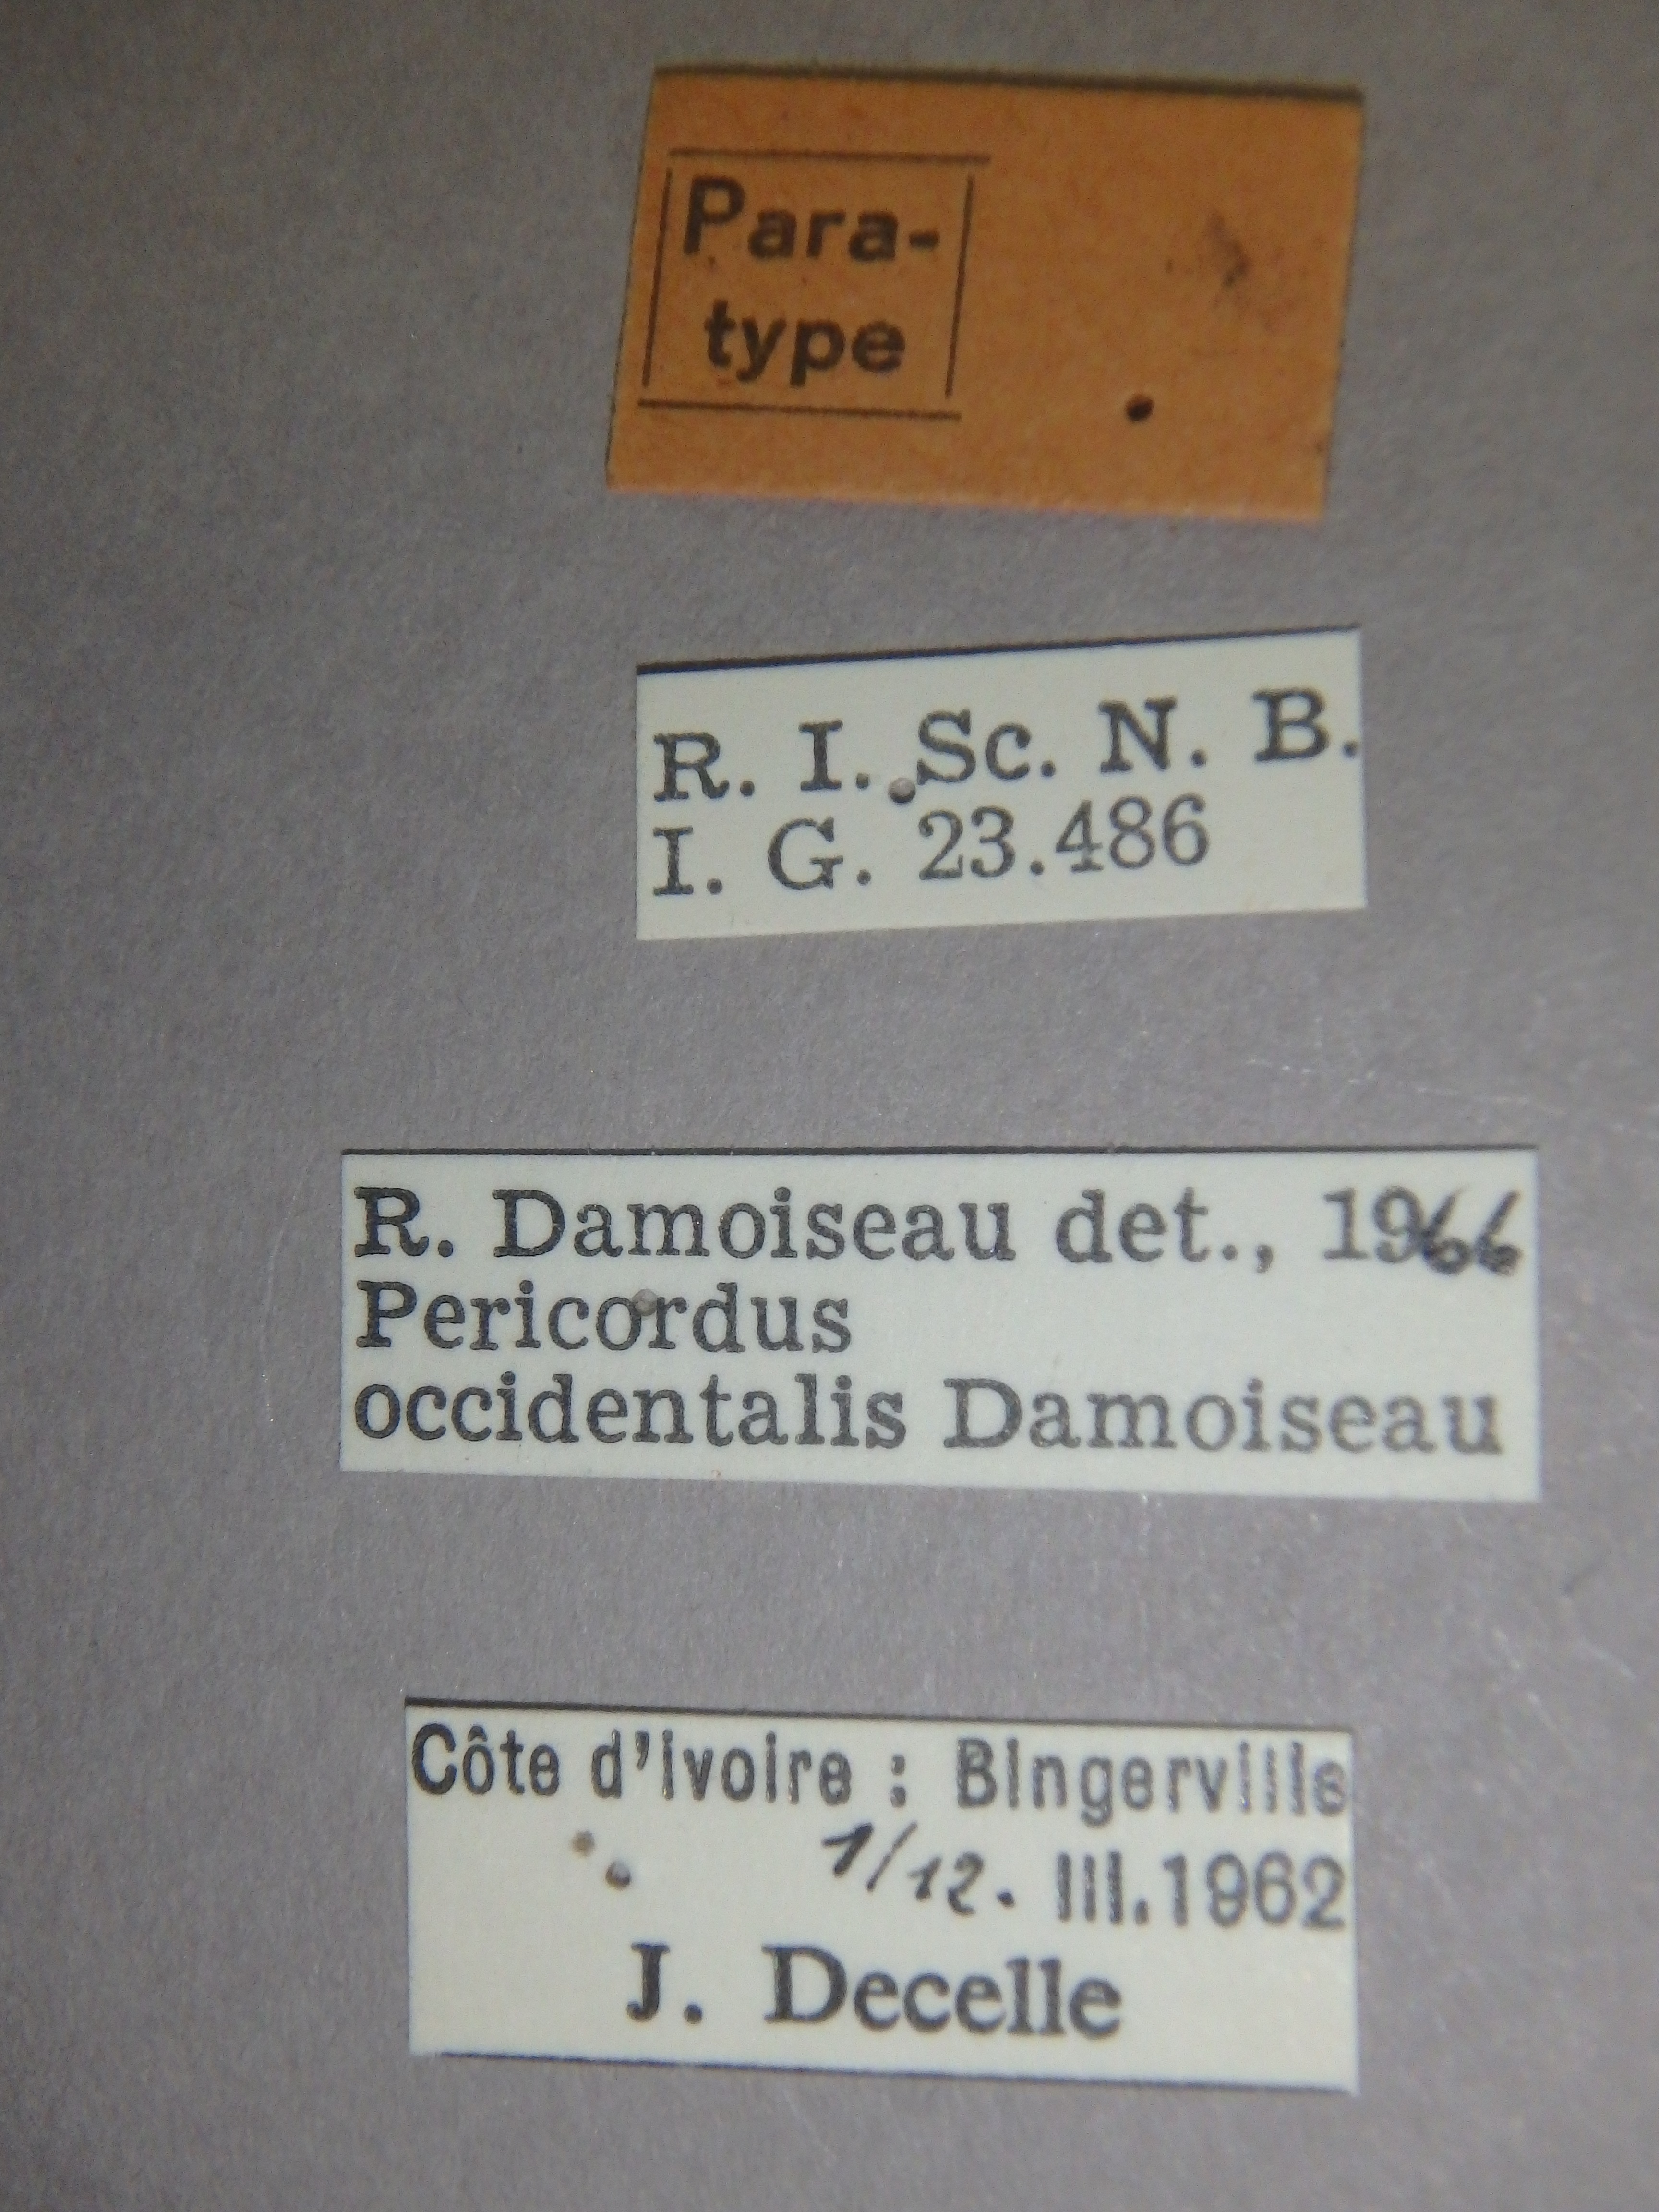 Pericordus occidentalis pt Labels.jpg